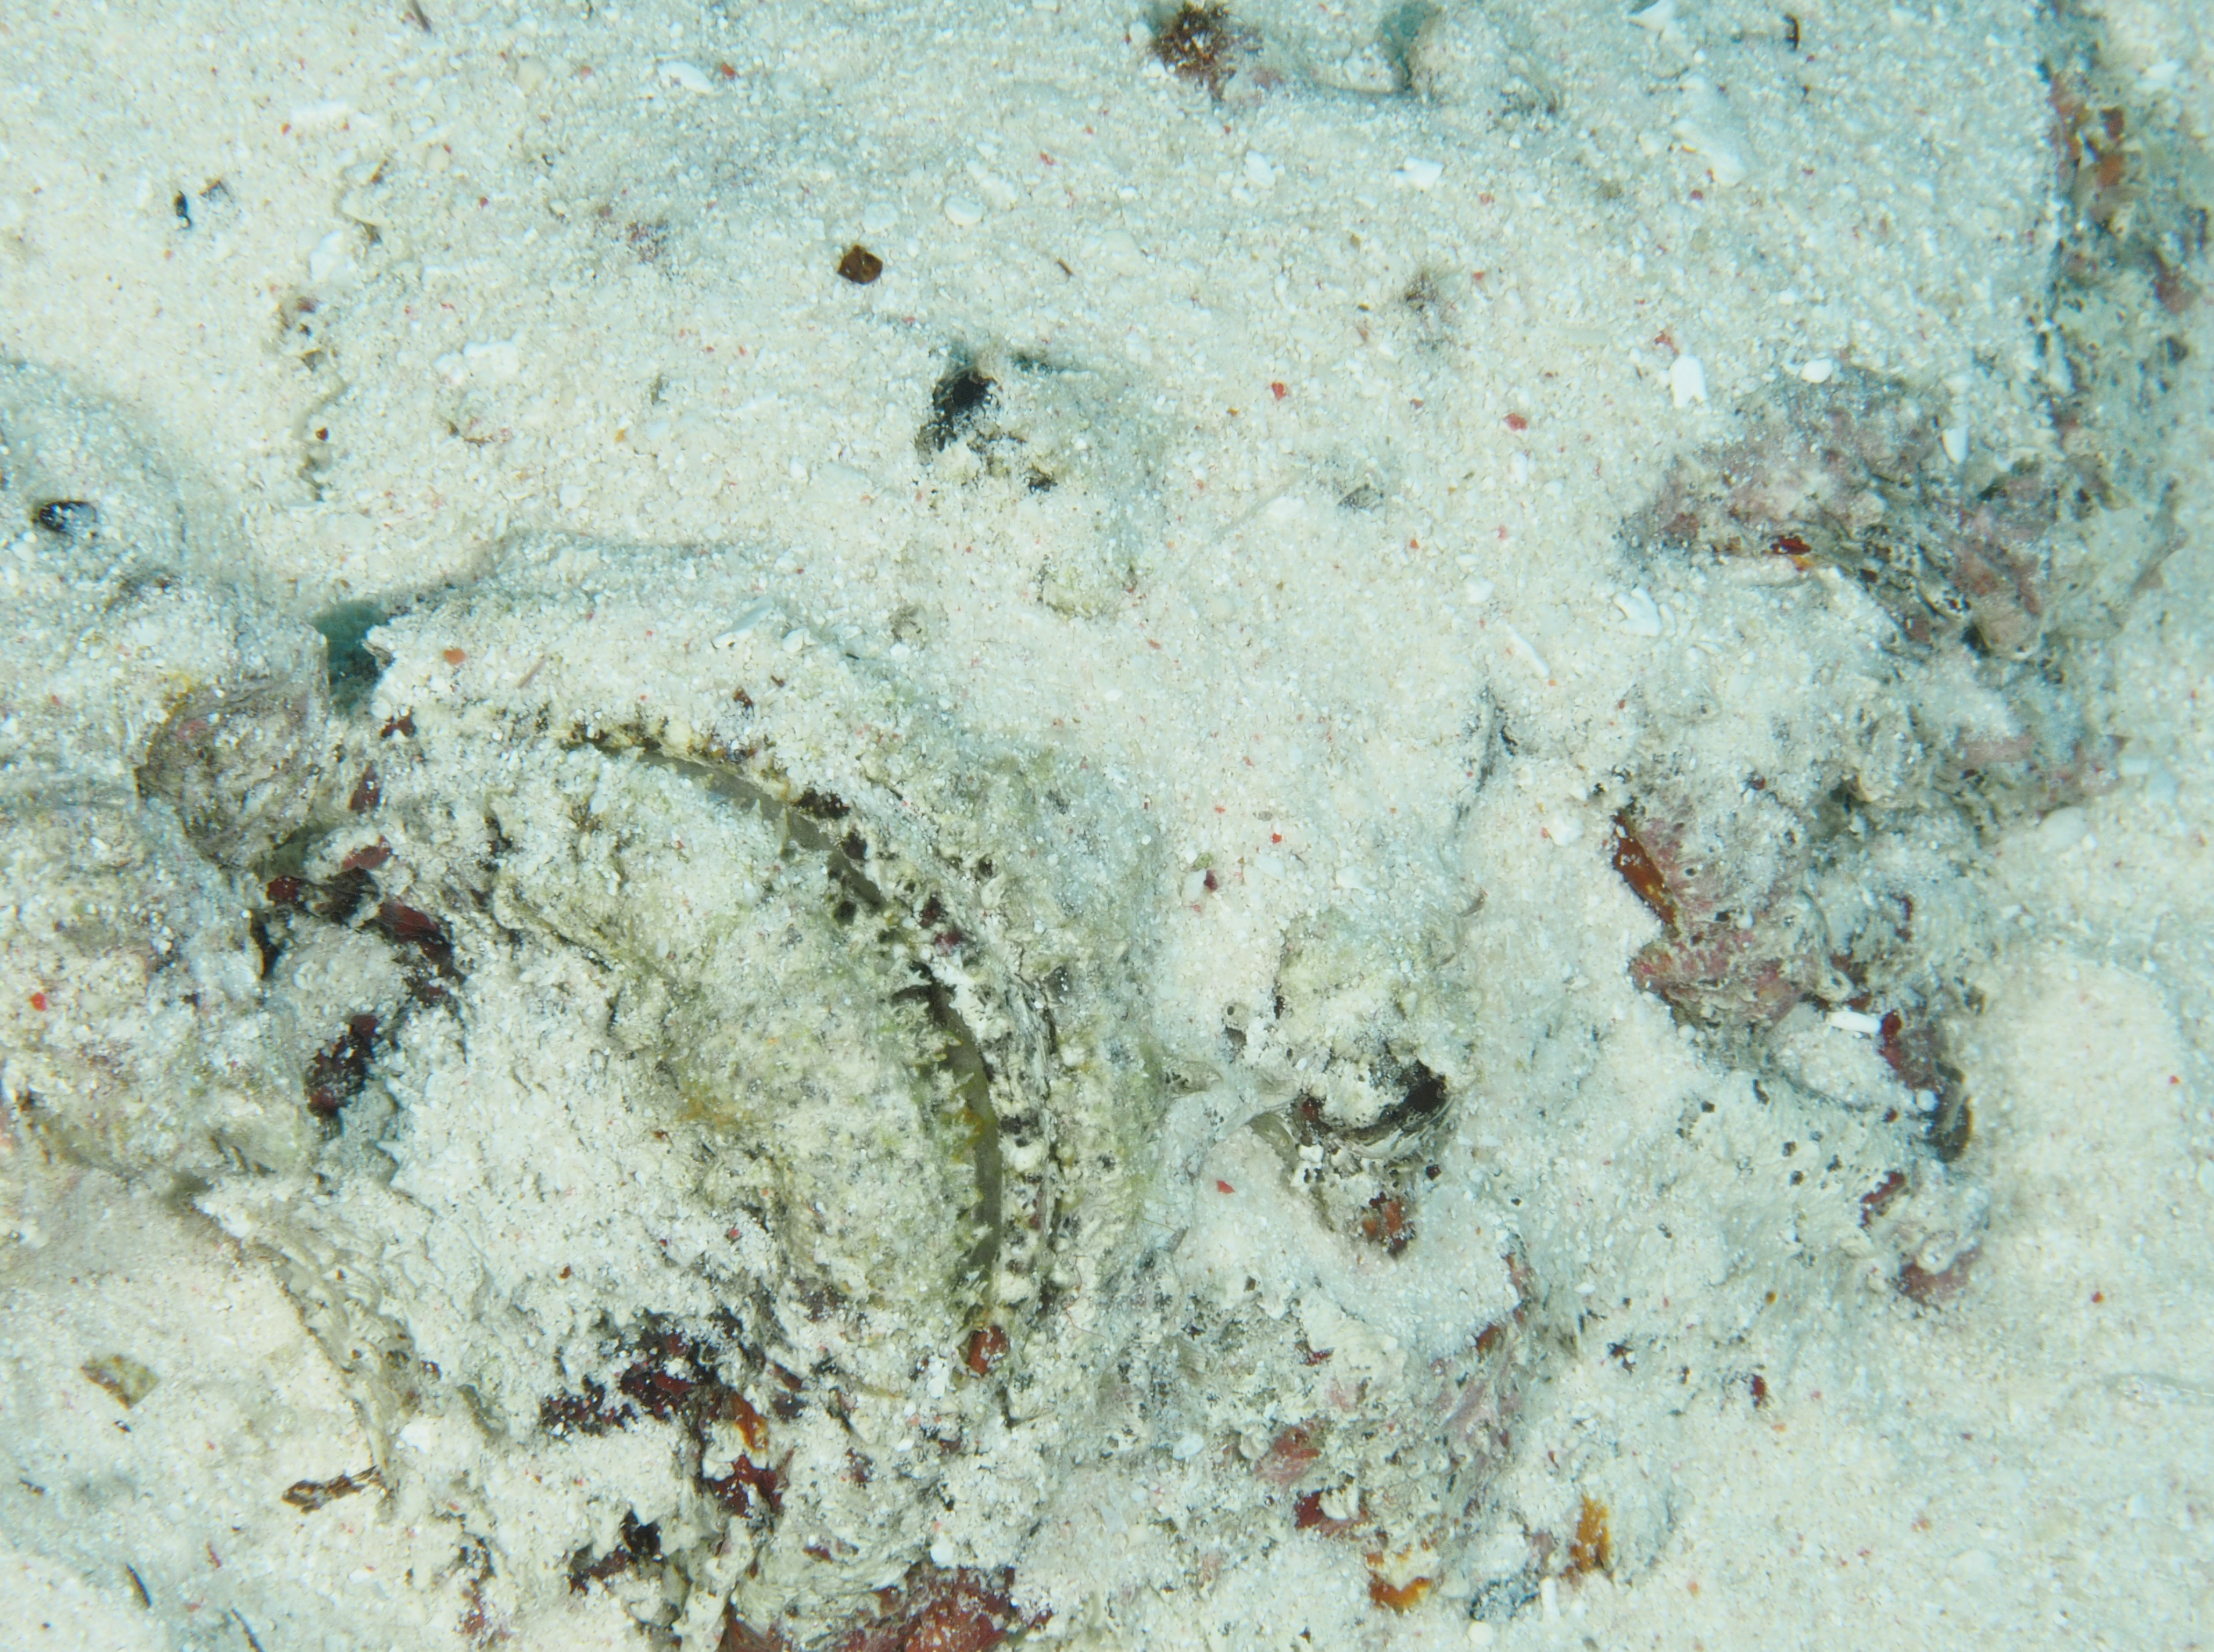 Reef Stonefish - Synanceia verrucosa